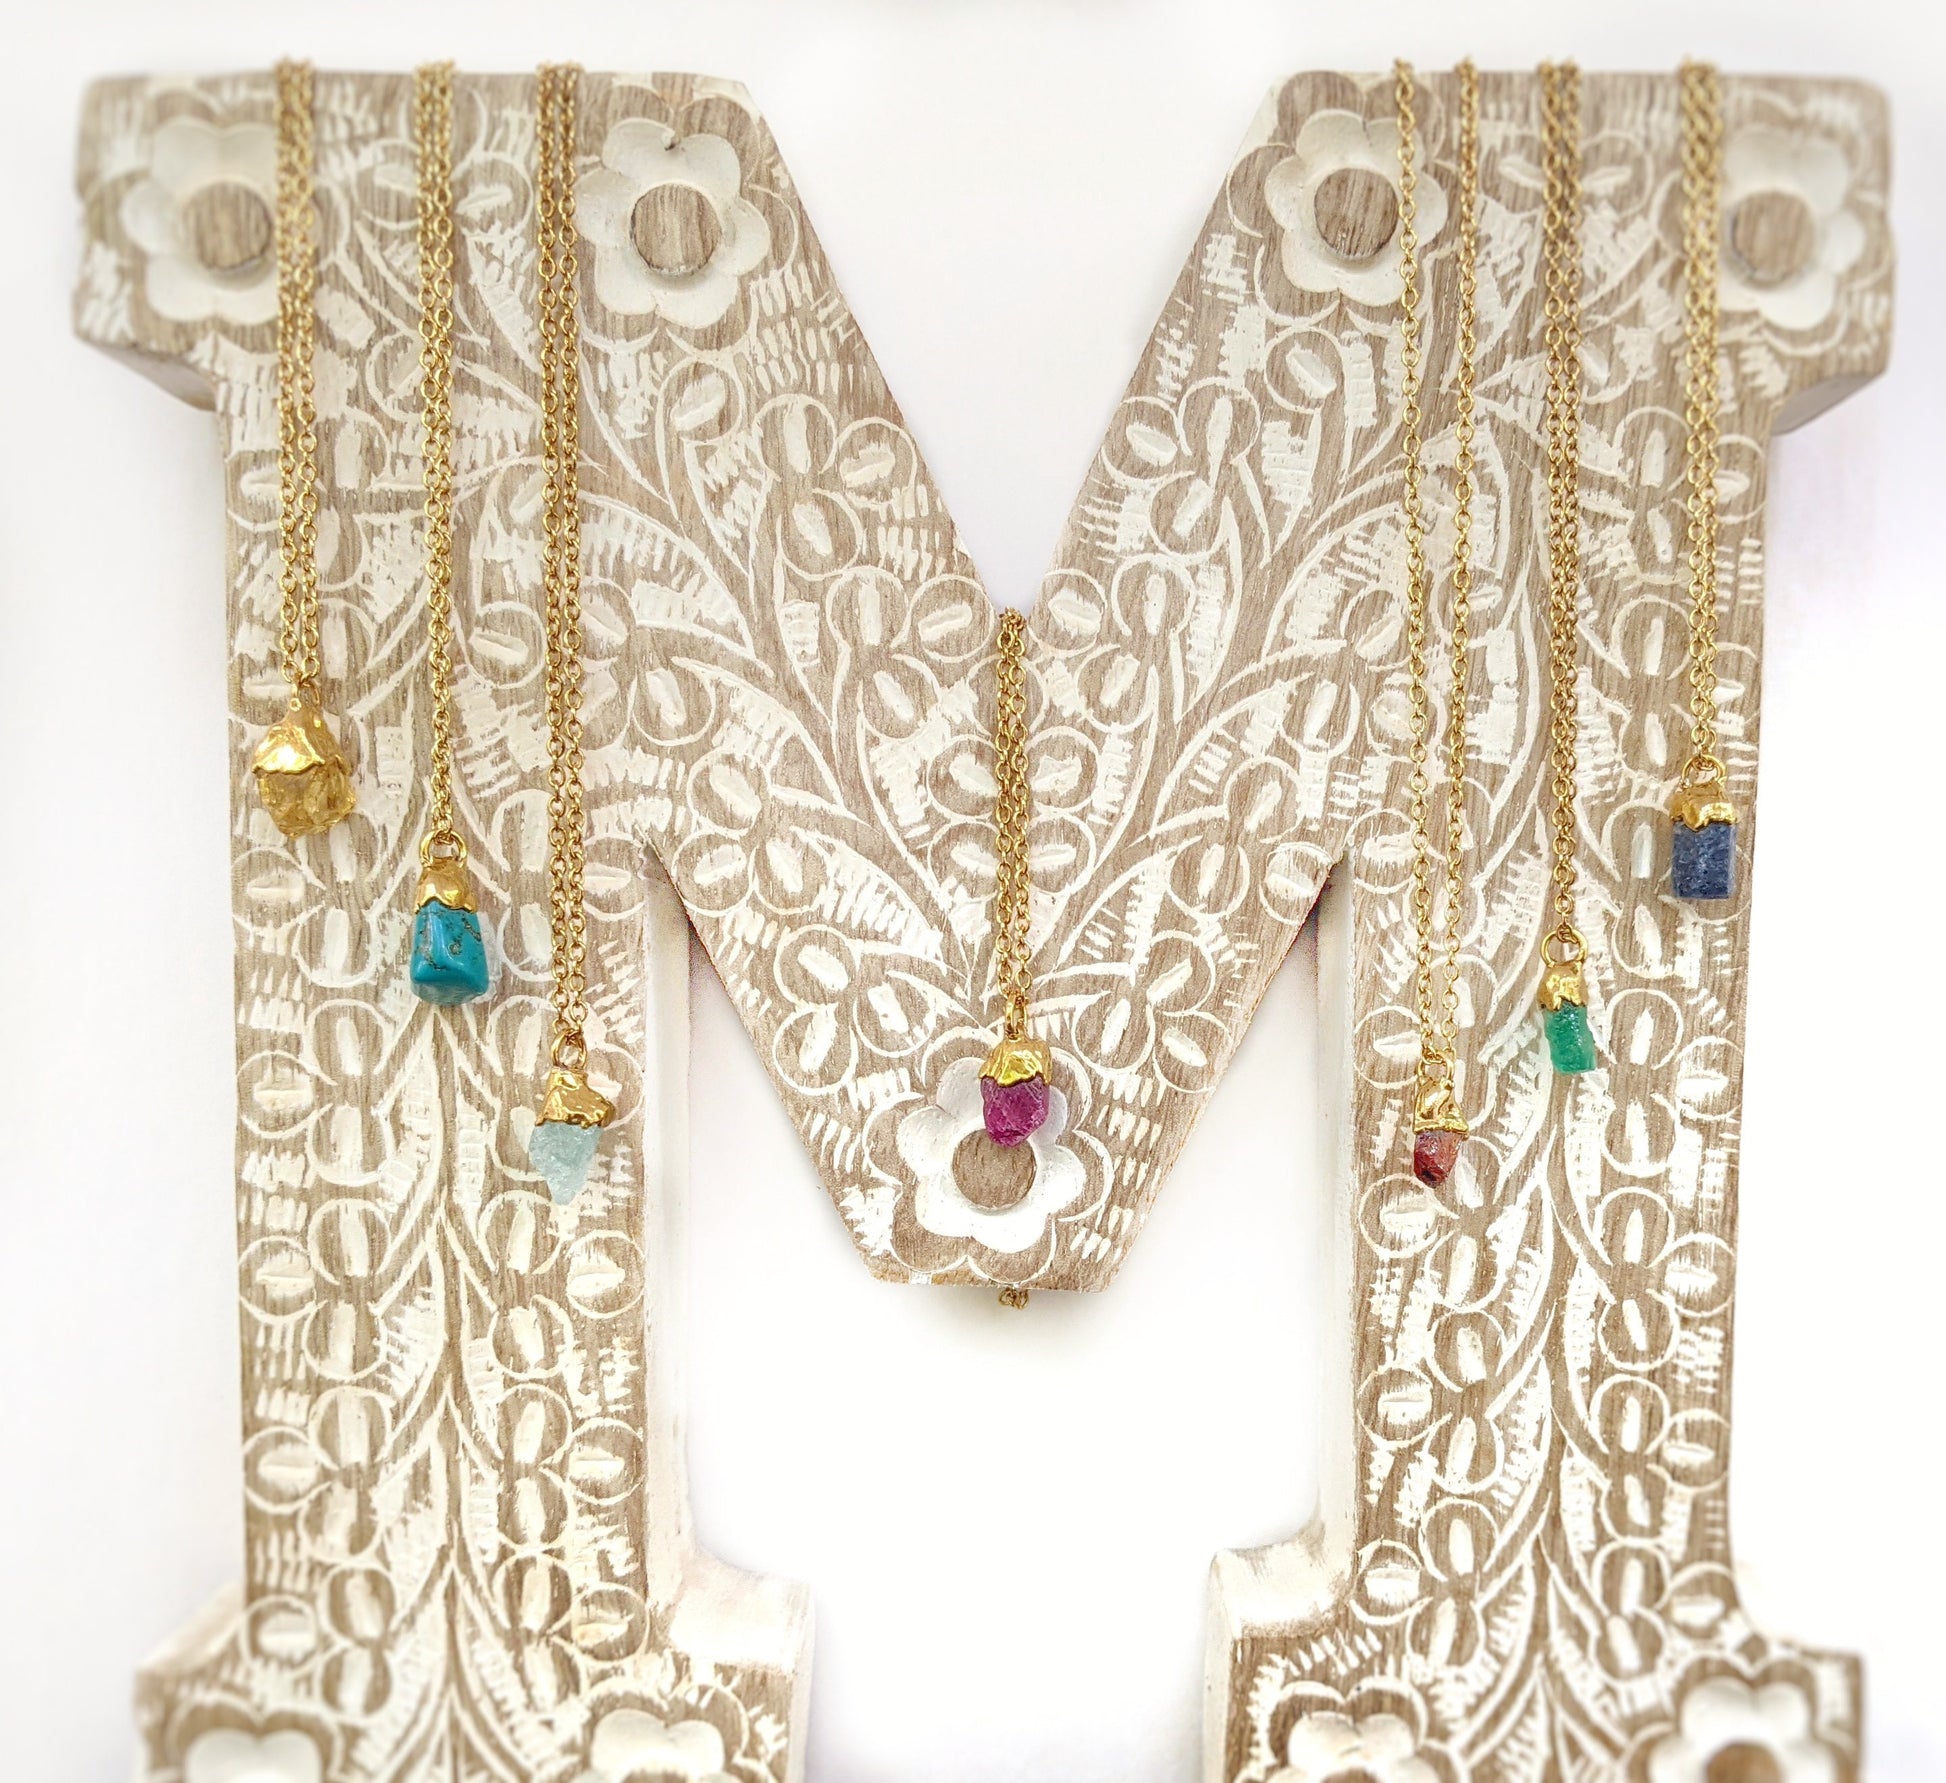 Raw Gemstone Necklaces uniquely set in 18k Gold